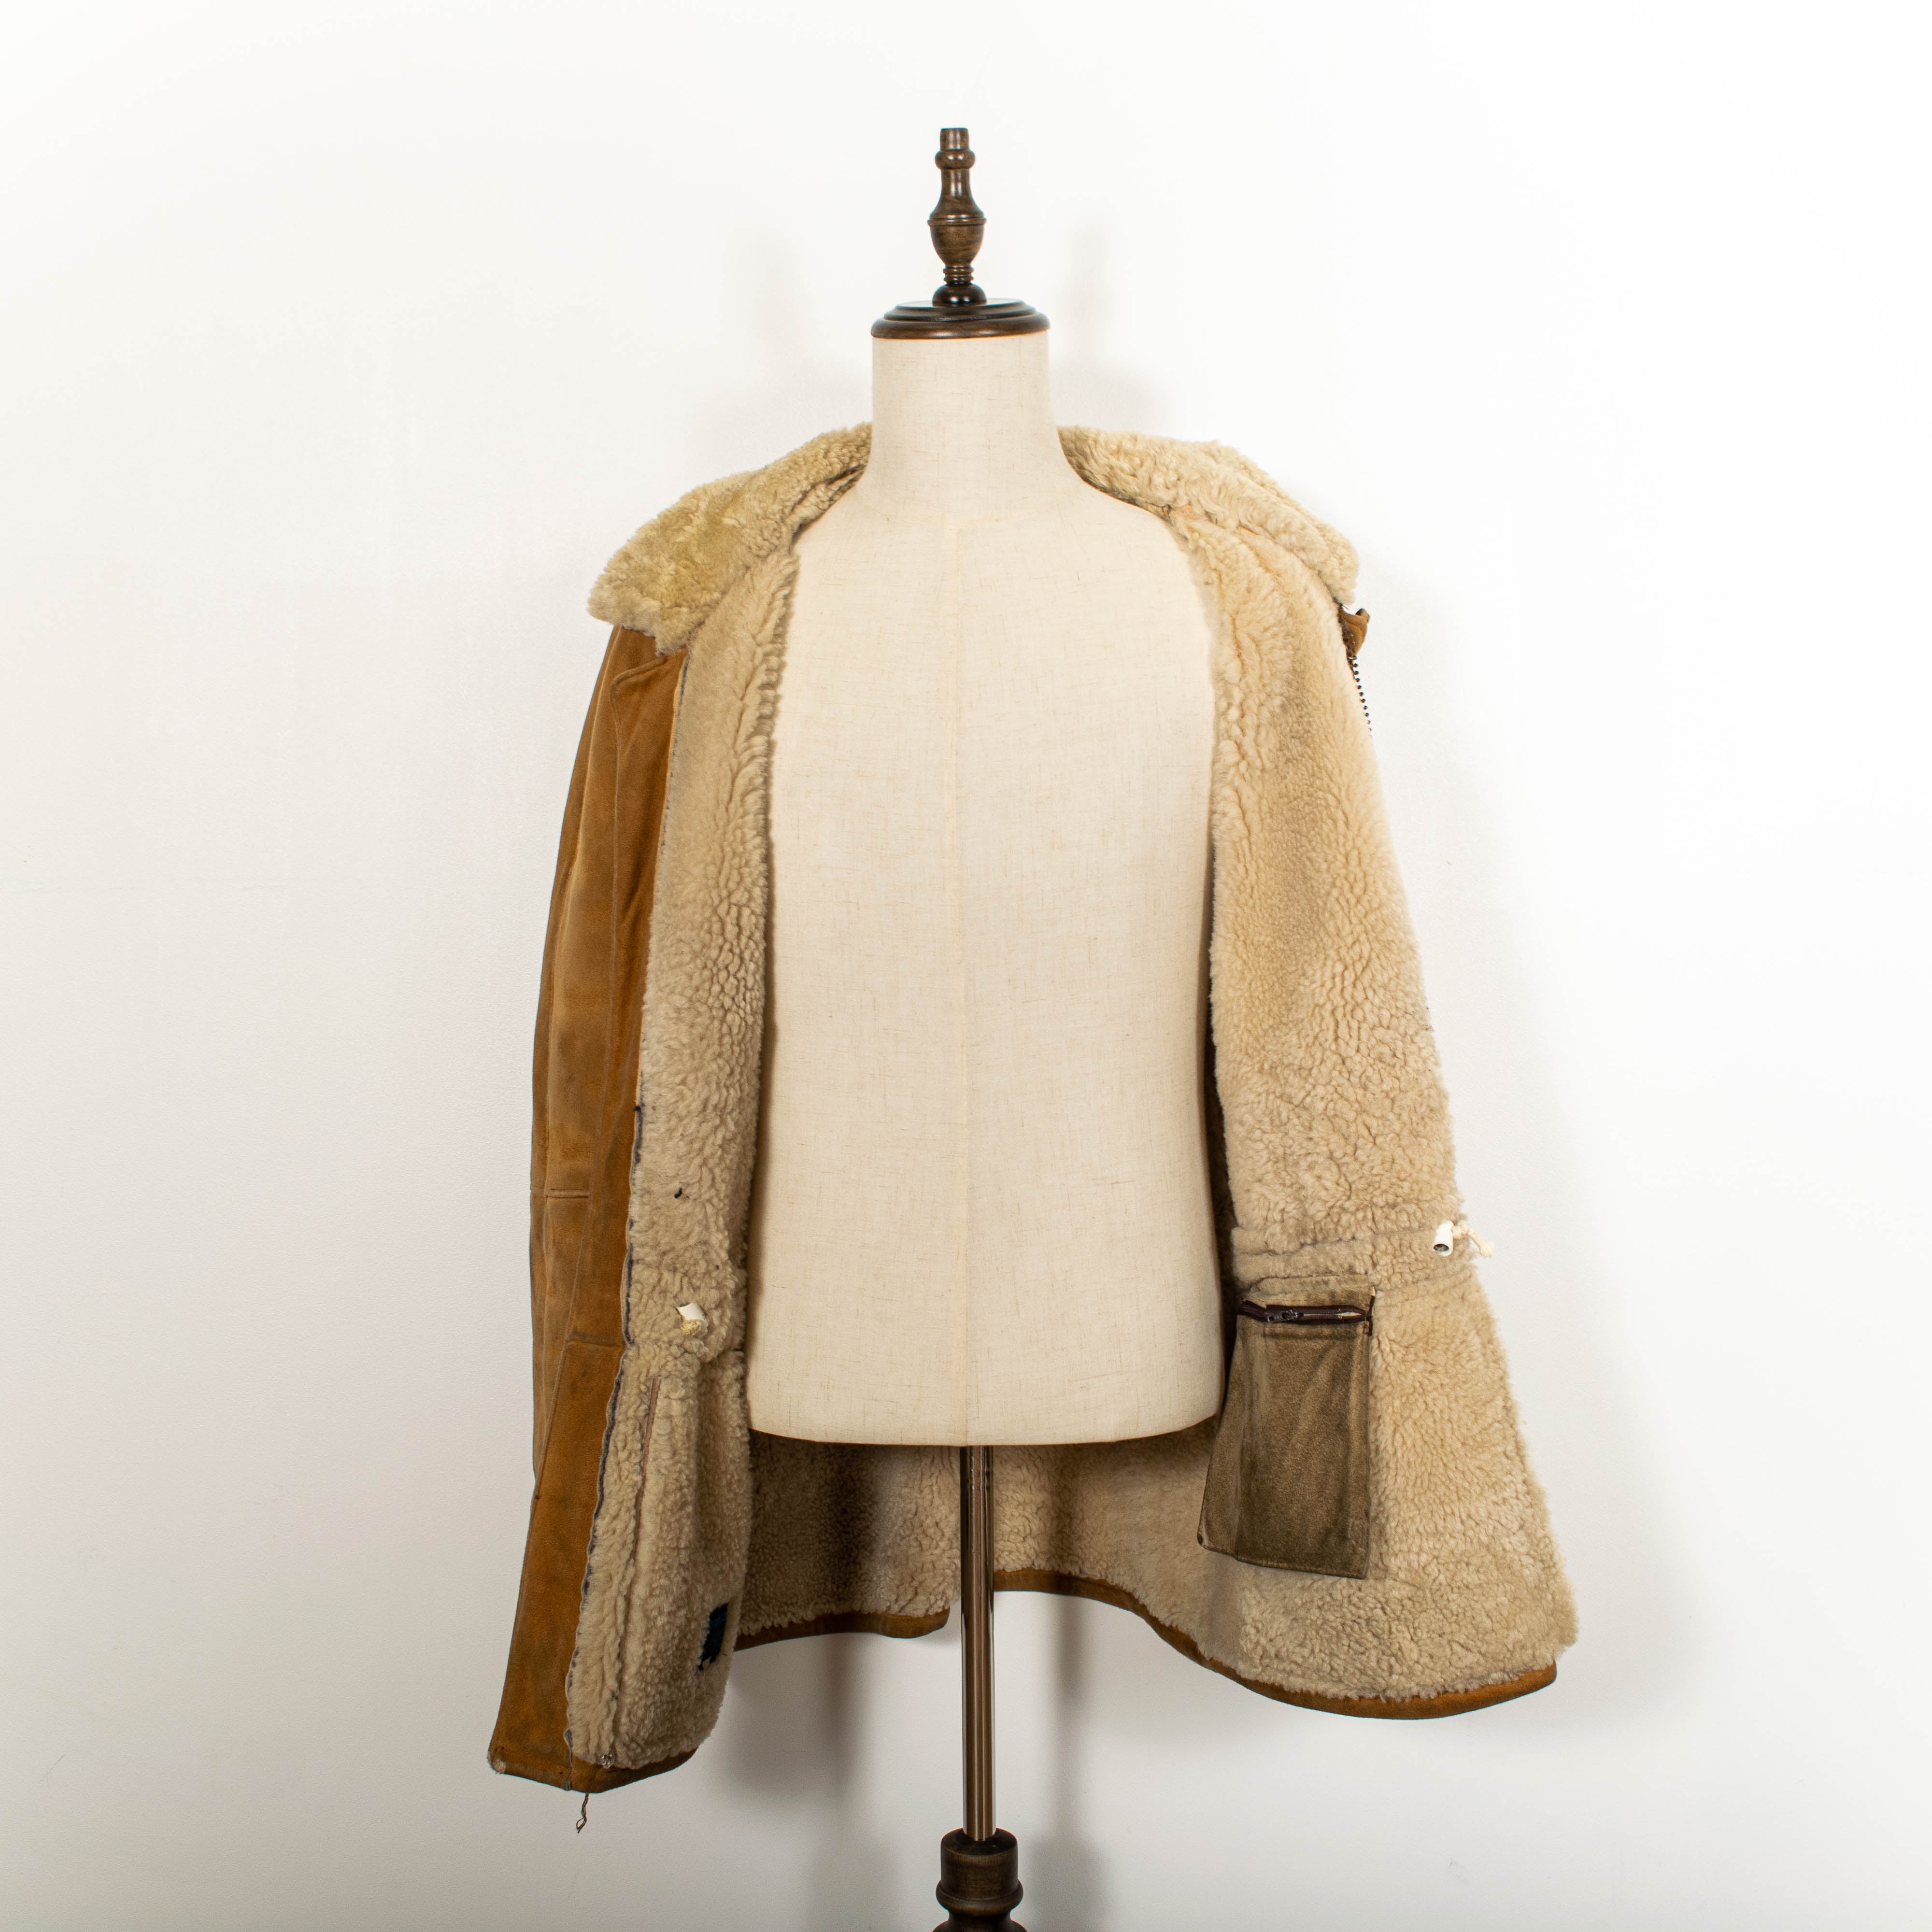 Vintage Brown Leather Lambskin Shearling Zip Up Coat Womens M